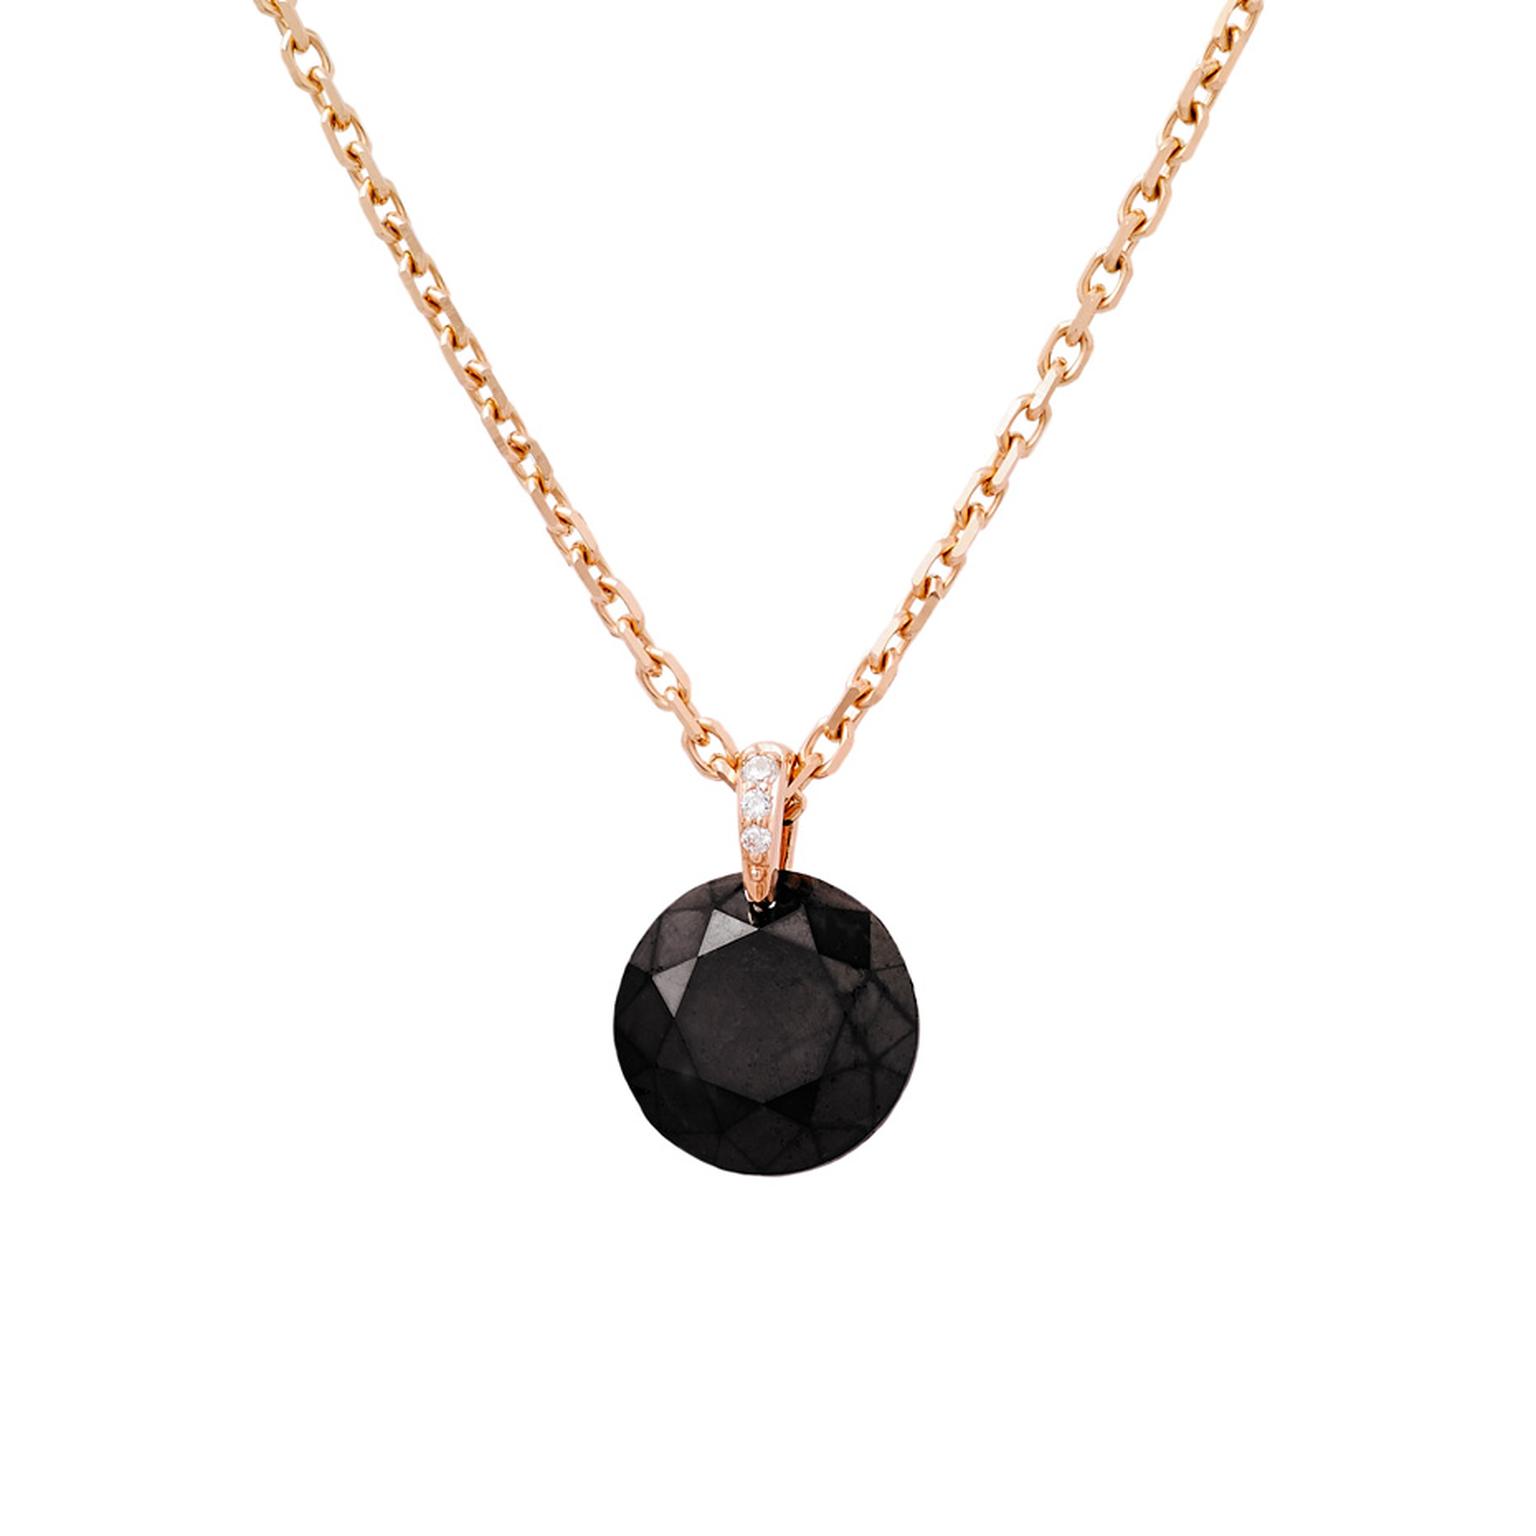 Raphaele Canot Set Free Diamonds collection gold and black diamond pendant with micro pavé detail